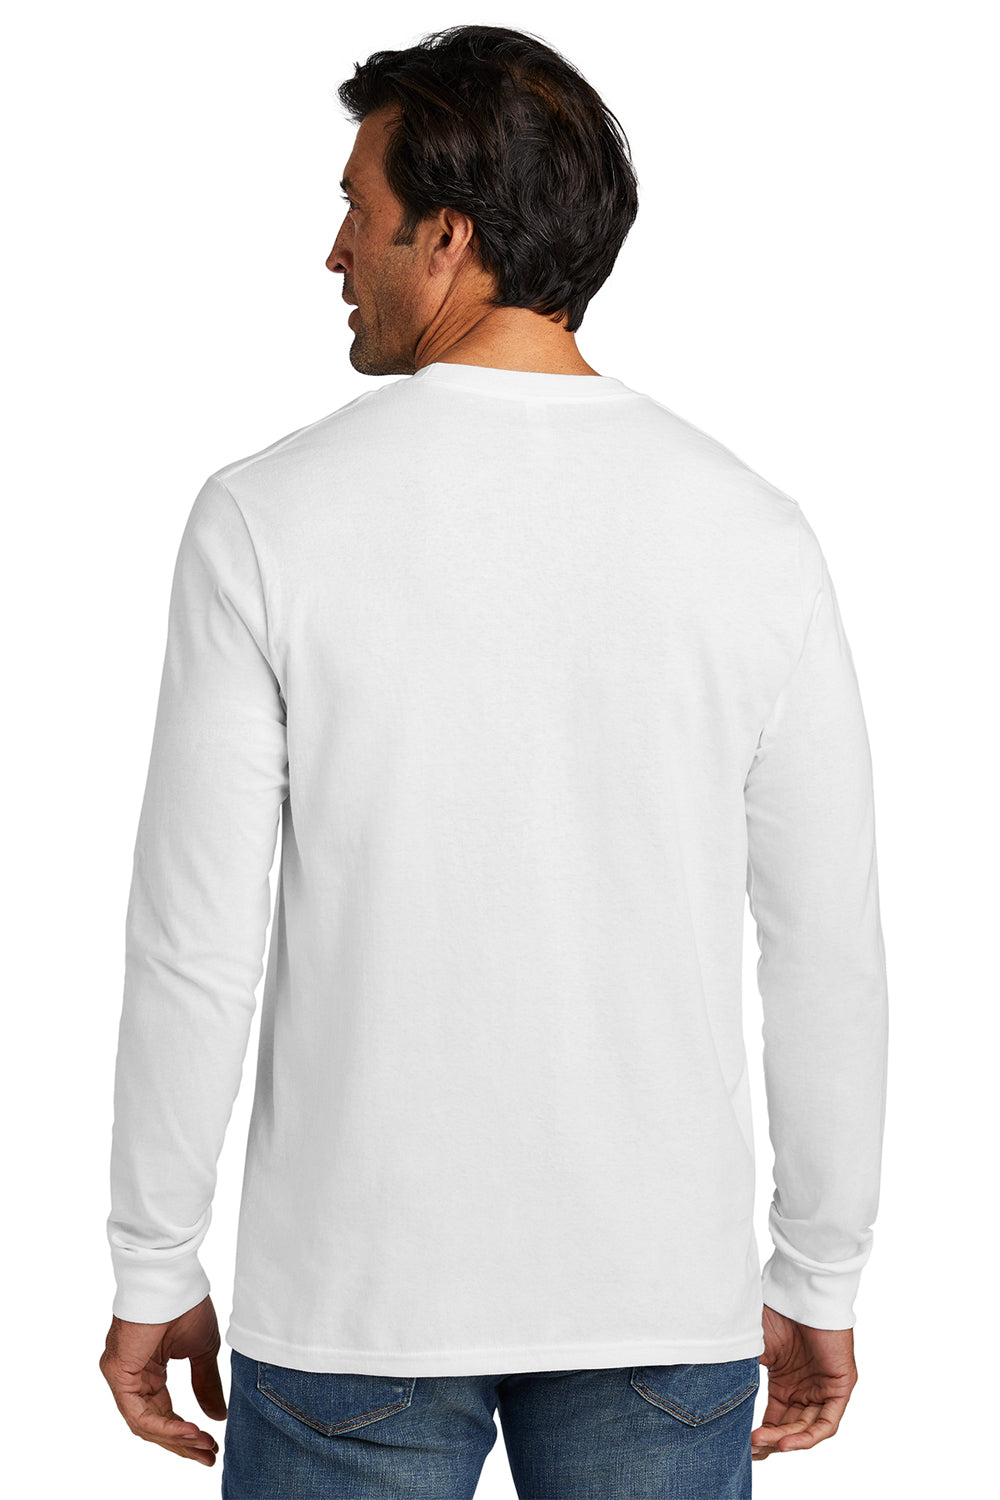 Volunteer Knitwear VL100LS USA Made All American Long Sleeve Crewneck T-Shirts White Back